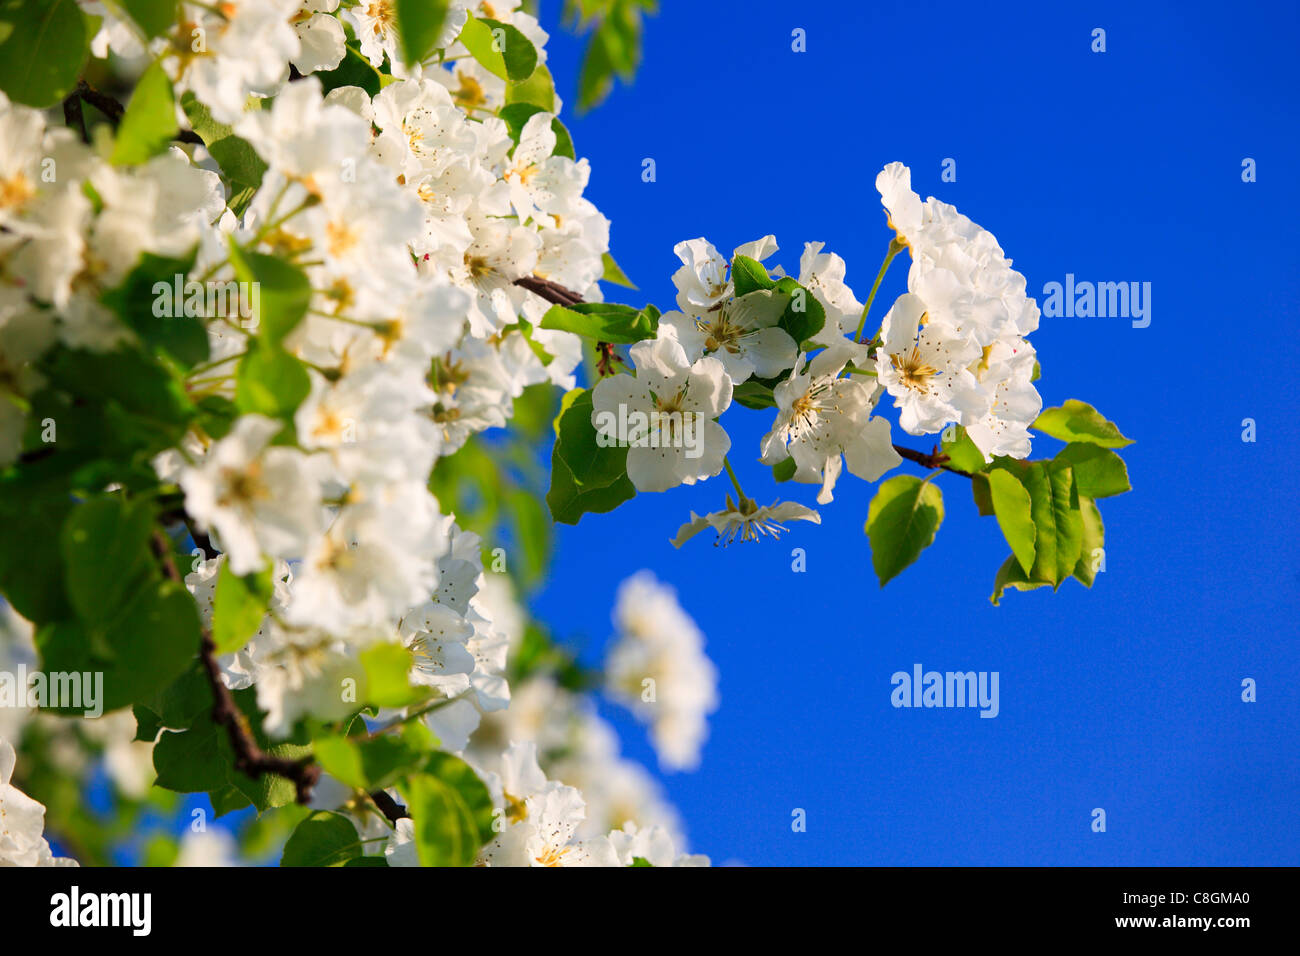 Agrarian, branch, knot, tree, pear tree, pear, pears, leaves, blossom, flourish, flower, splendour, detail, flora, spring, sky, Stock Photo